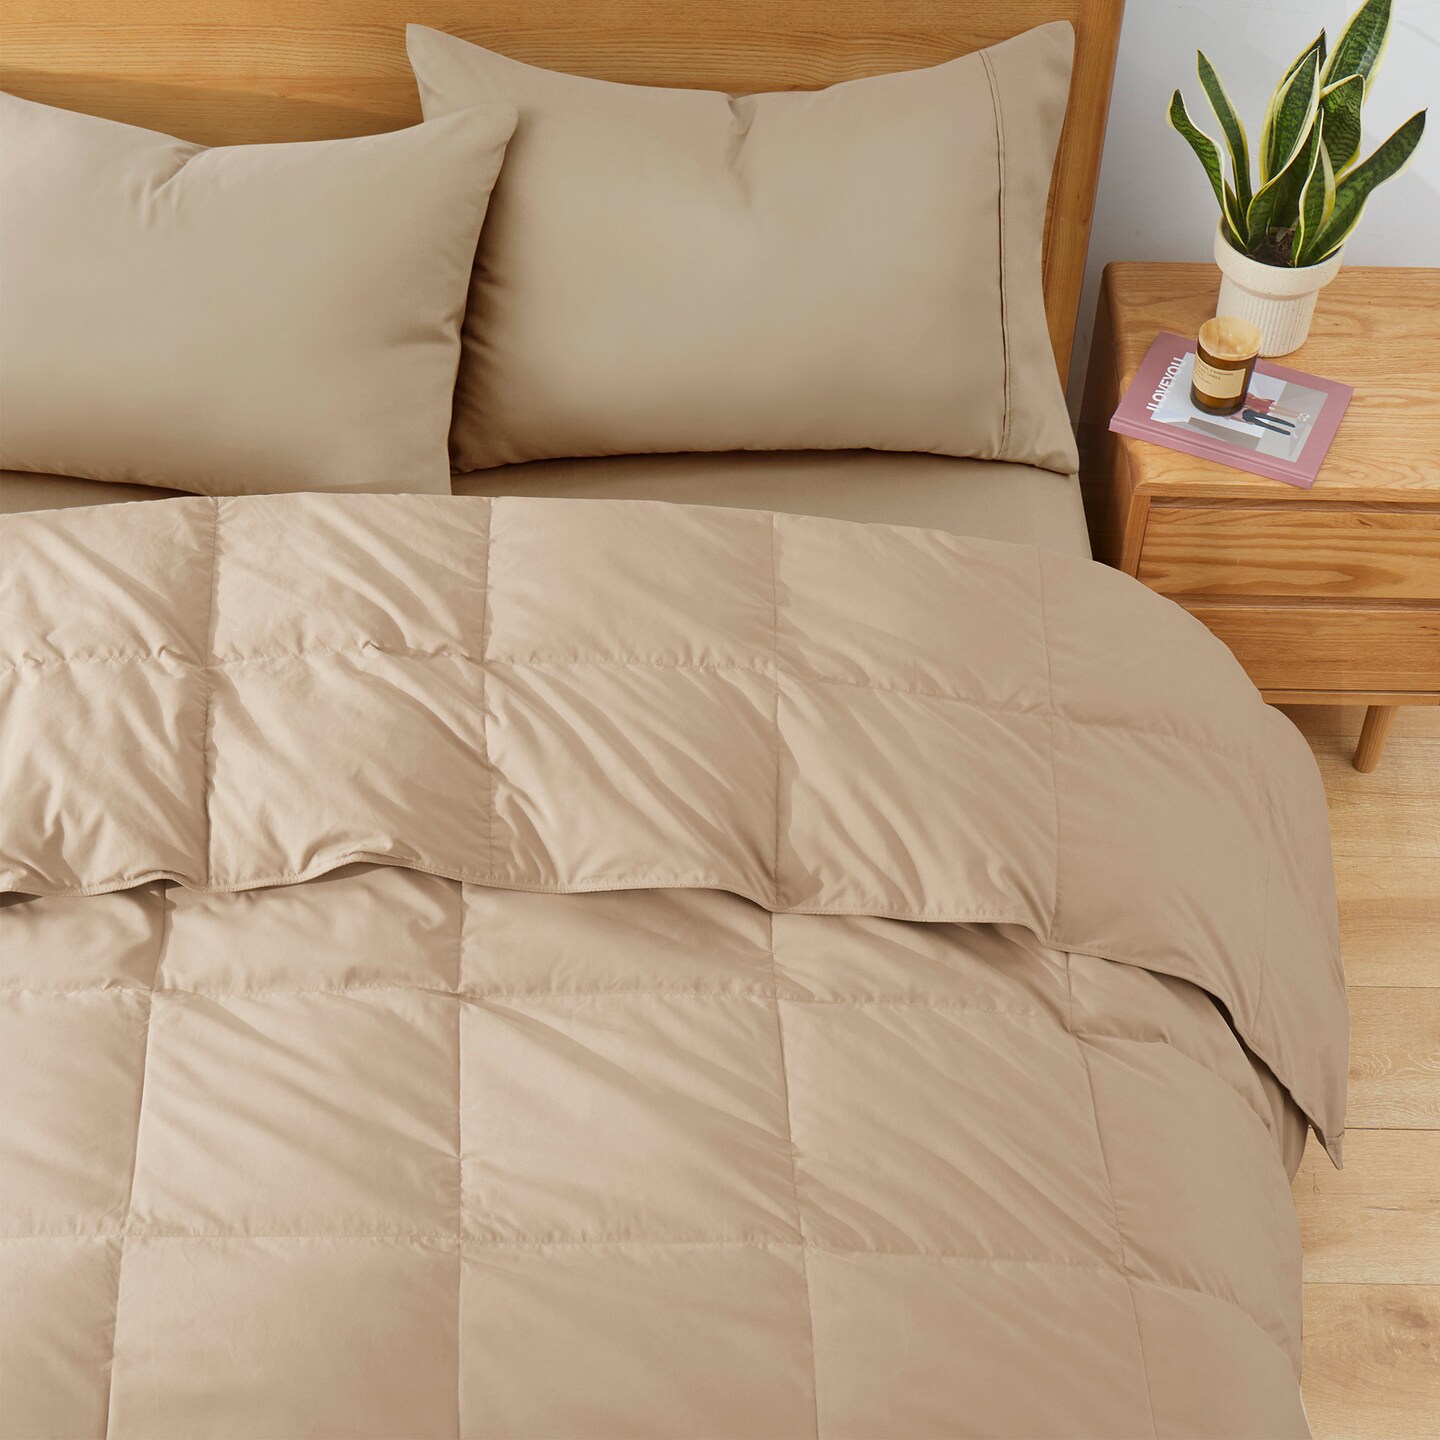 Puredown Lightweight Goose Down Feather Fiber Comforter Soft and Fluffy Comforter for Restful Sleep